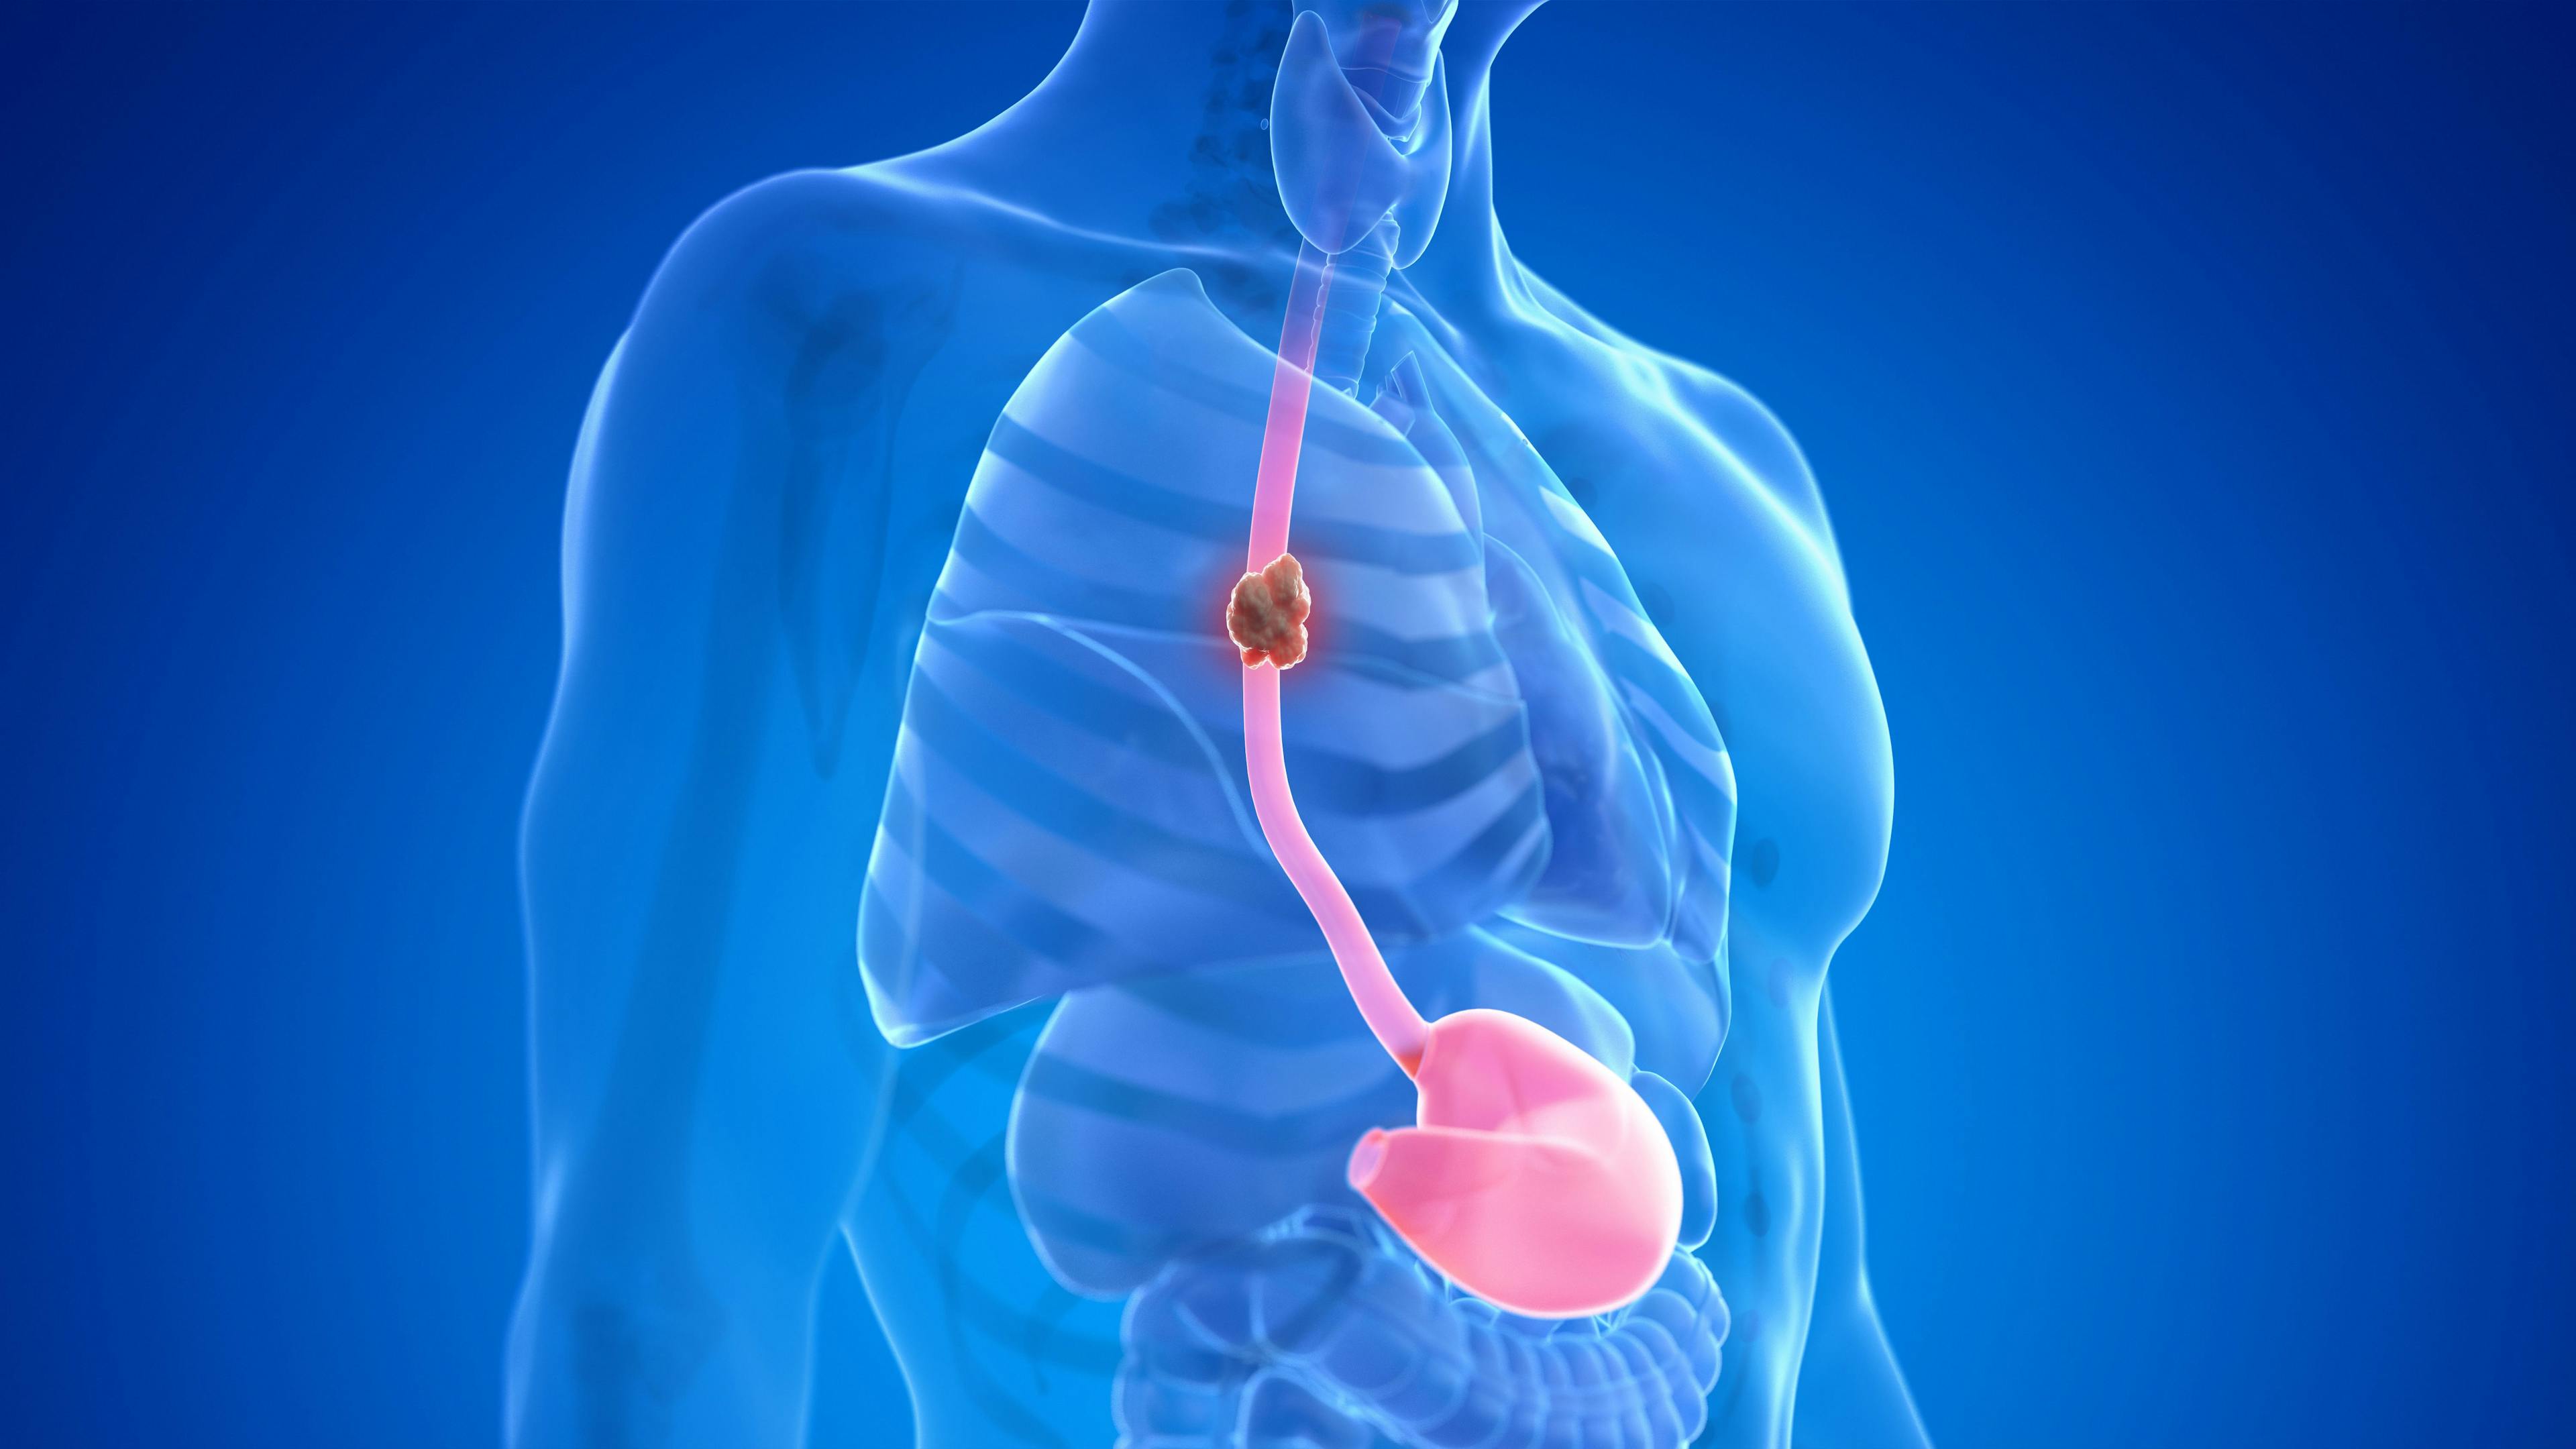 3D rendered medically accurate illustration of esophagus cancer: © Sebastian Kaulitzki - stock.adobe.com